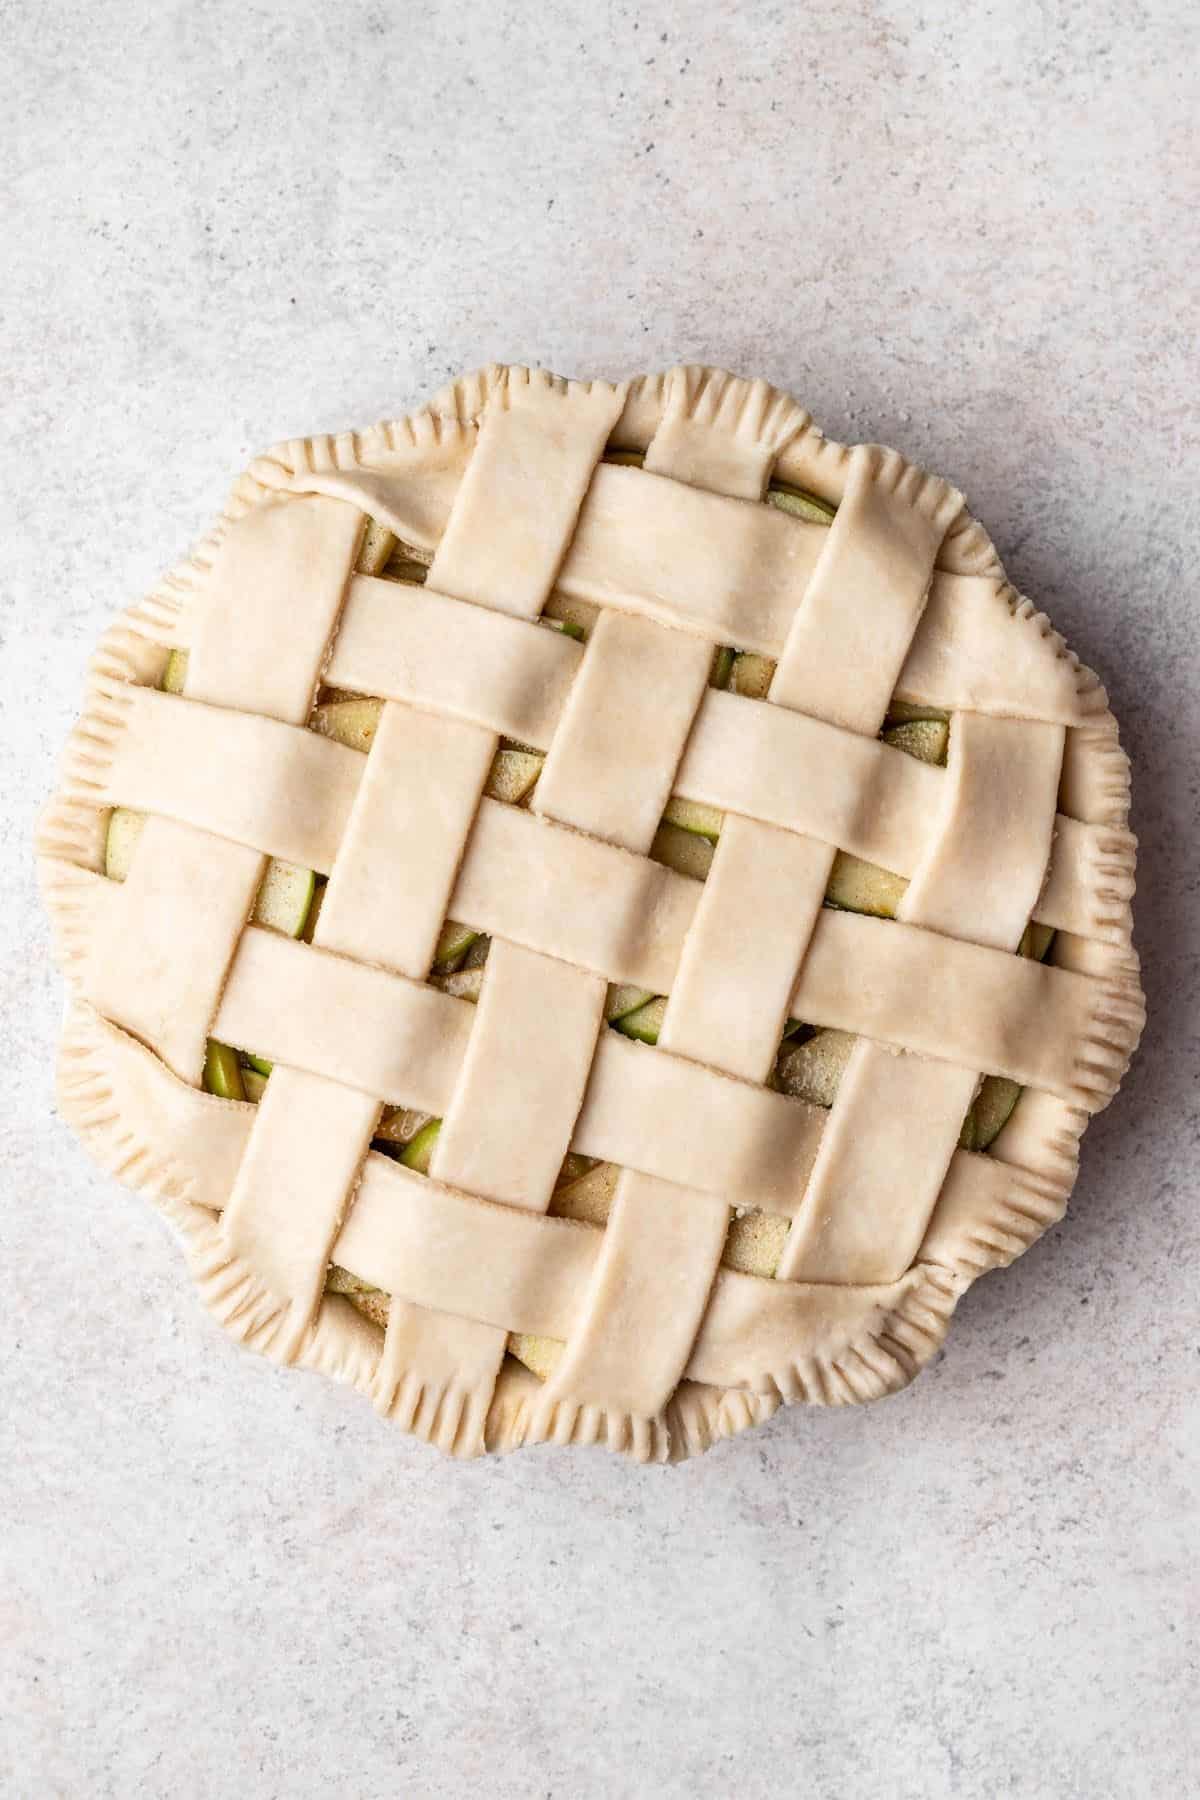 Pie crust lattice top overtop a homemade apple pie.